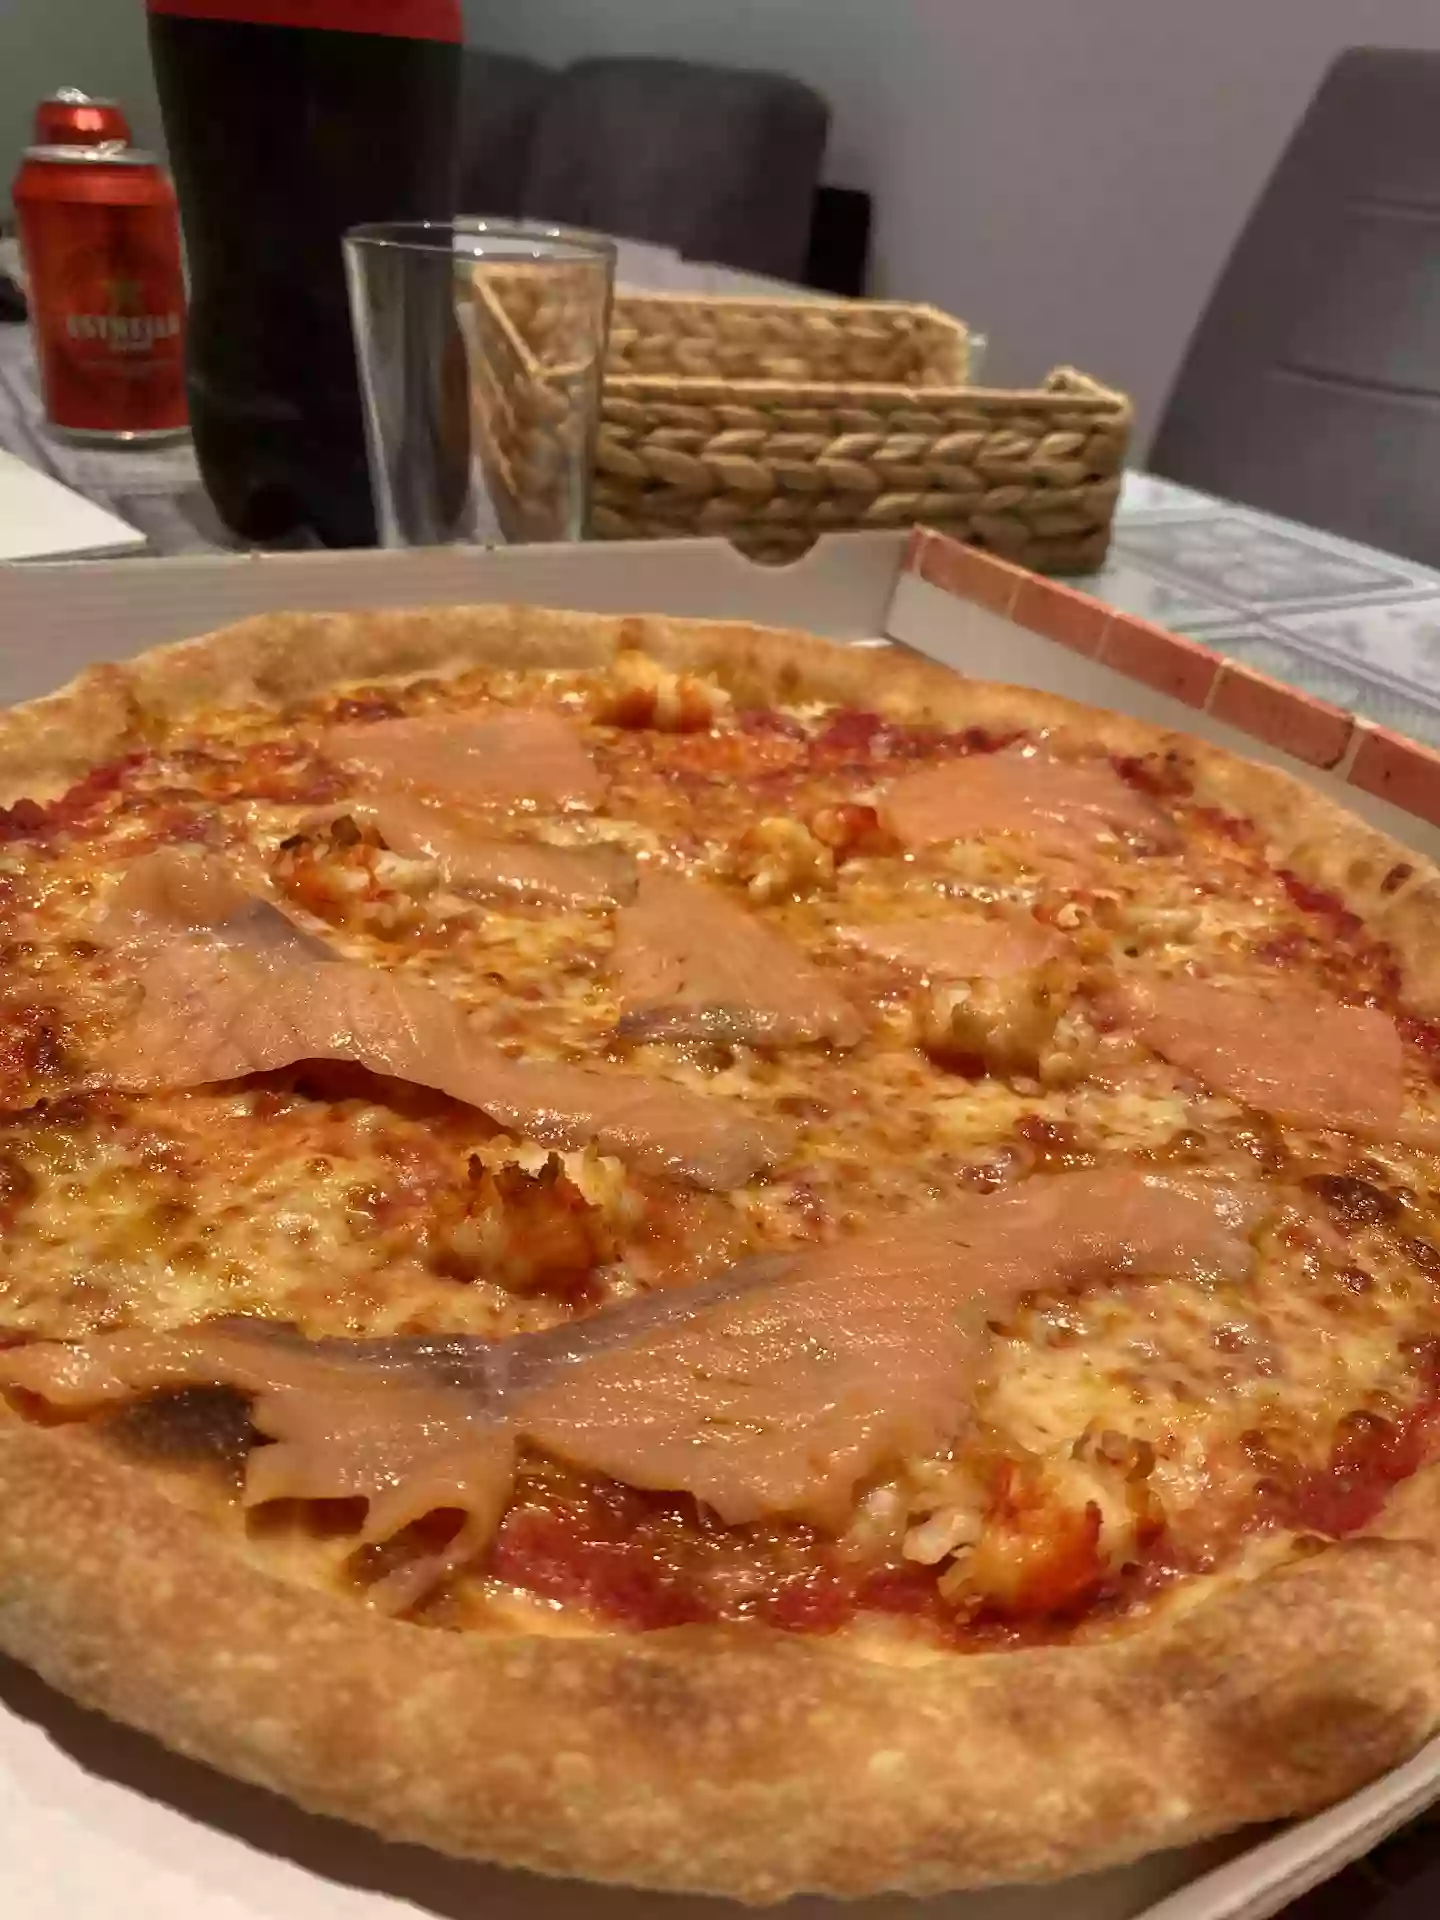 Pizza Luca